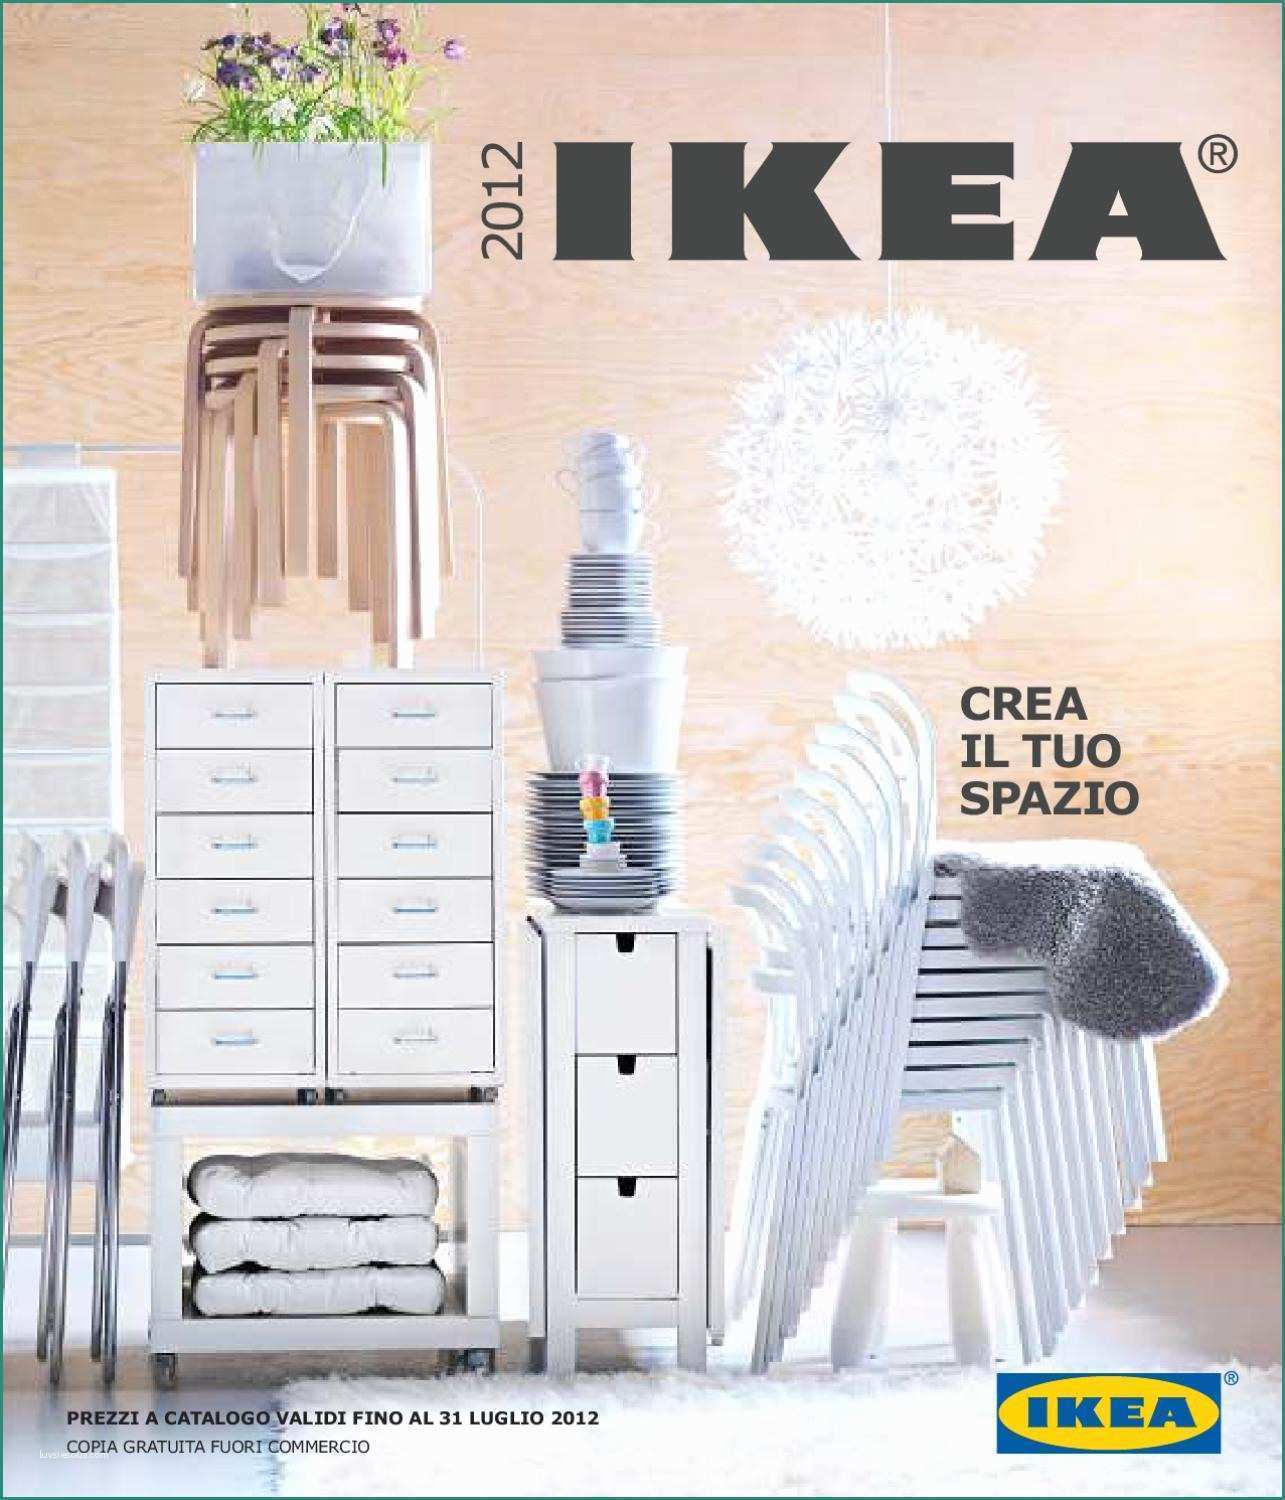 Cucina Metri Lineari Prezzi E Ikea Catalogo 2012 by Mercializzando toscana issuu